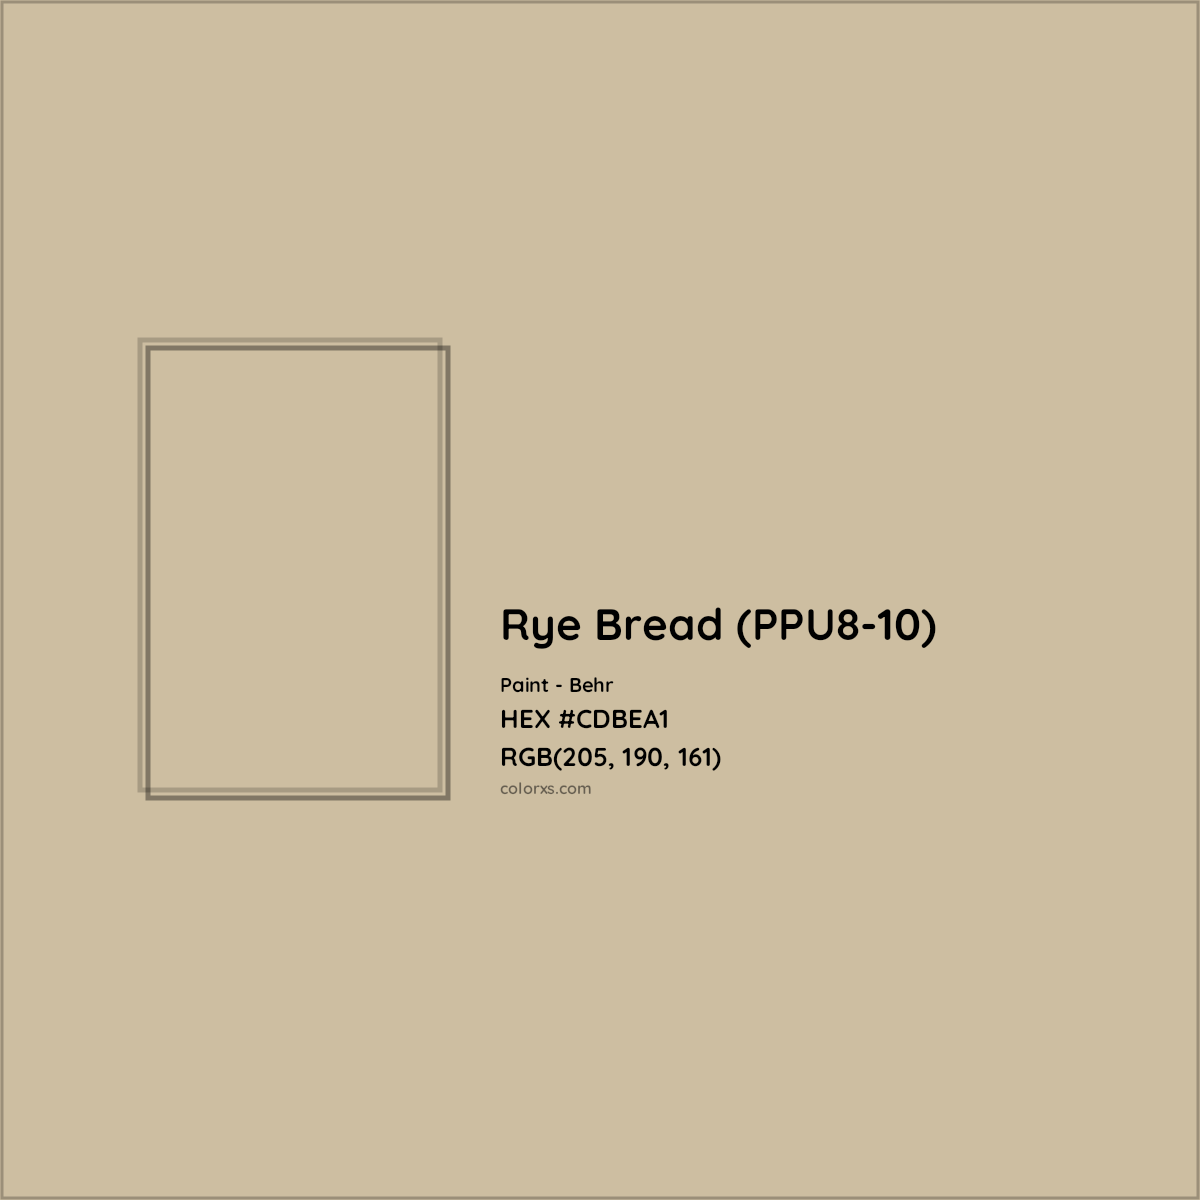 HEX #CDBEA1 Rye Bread (PPU8-10) Paint Behr - Color Code